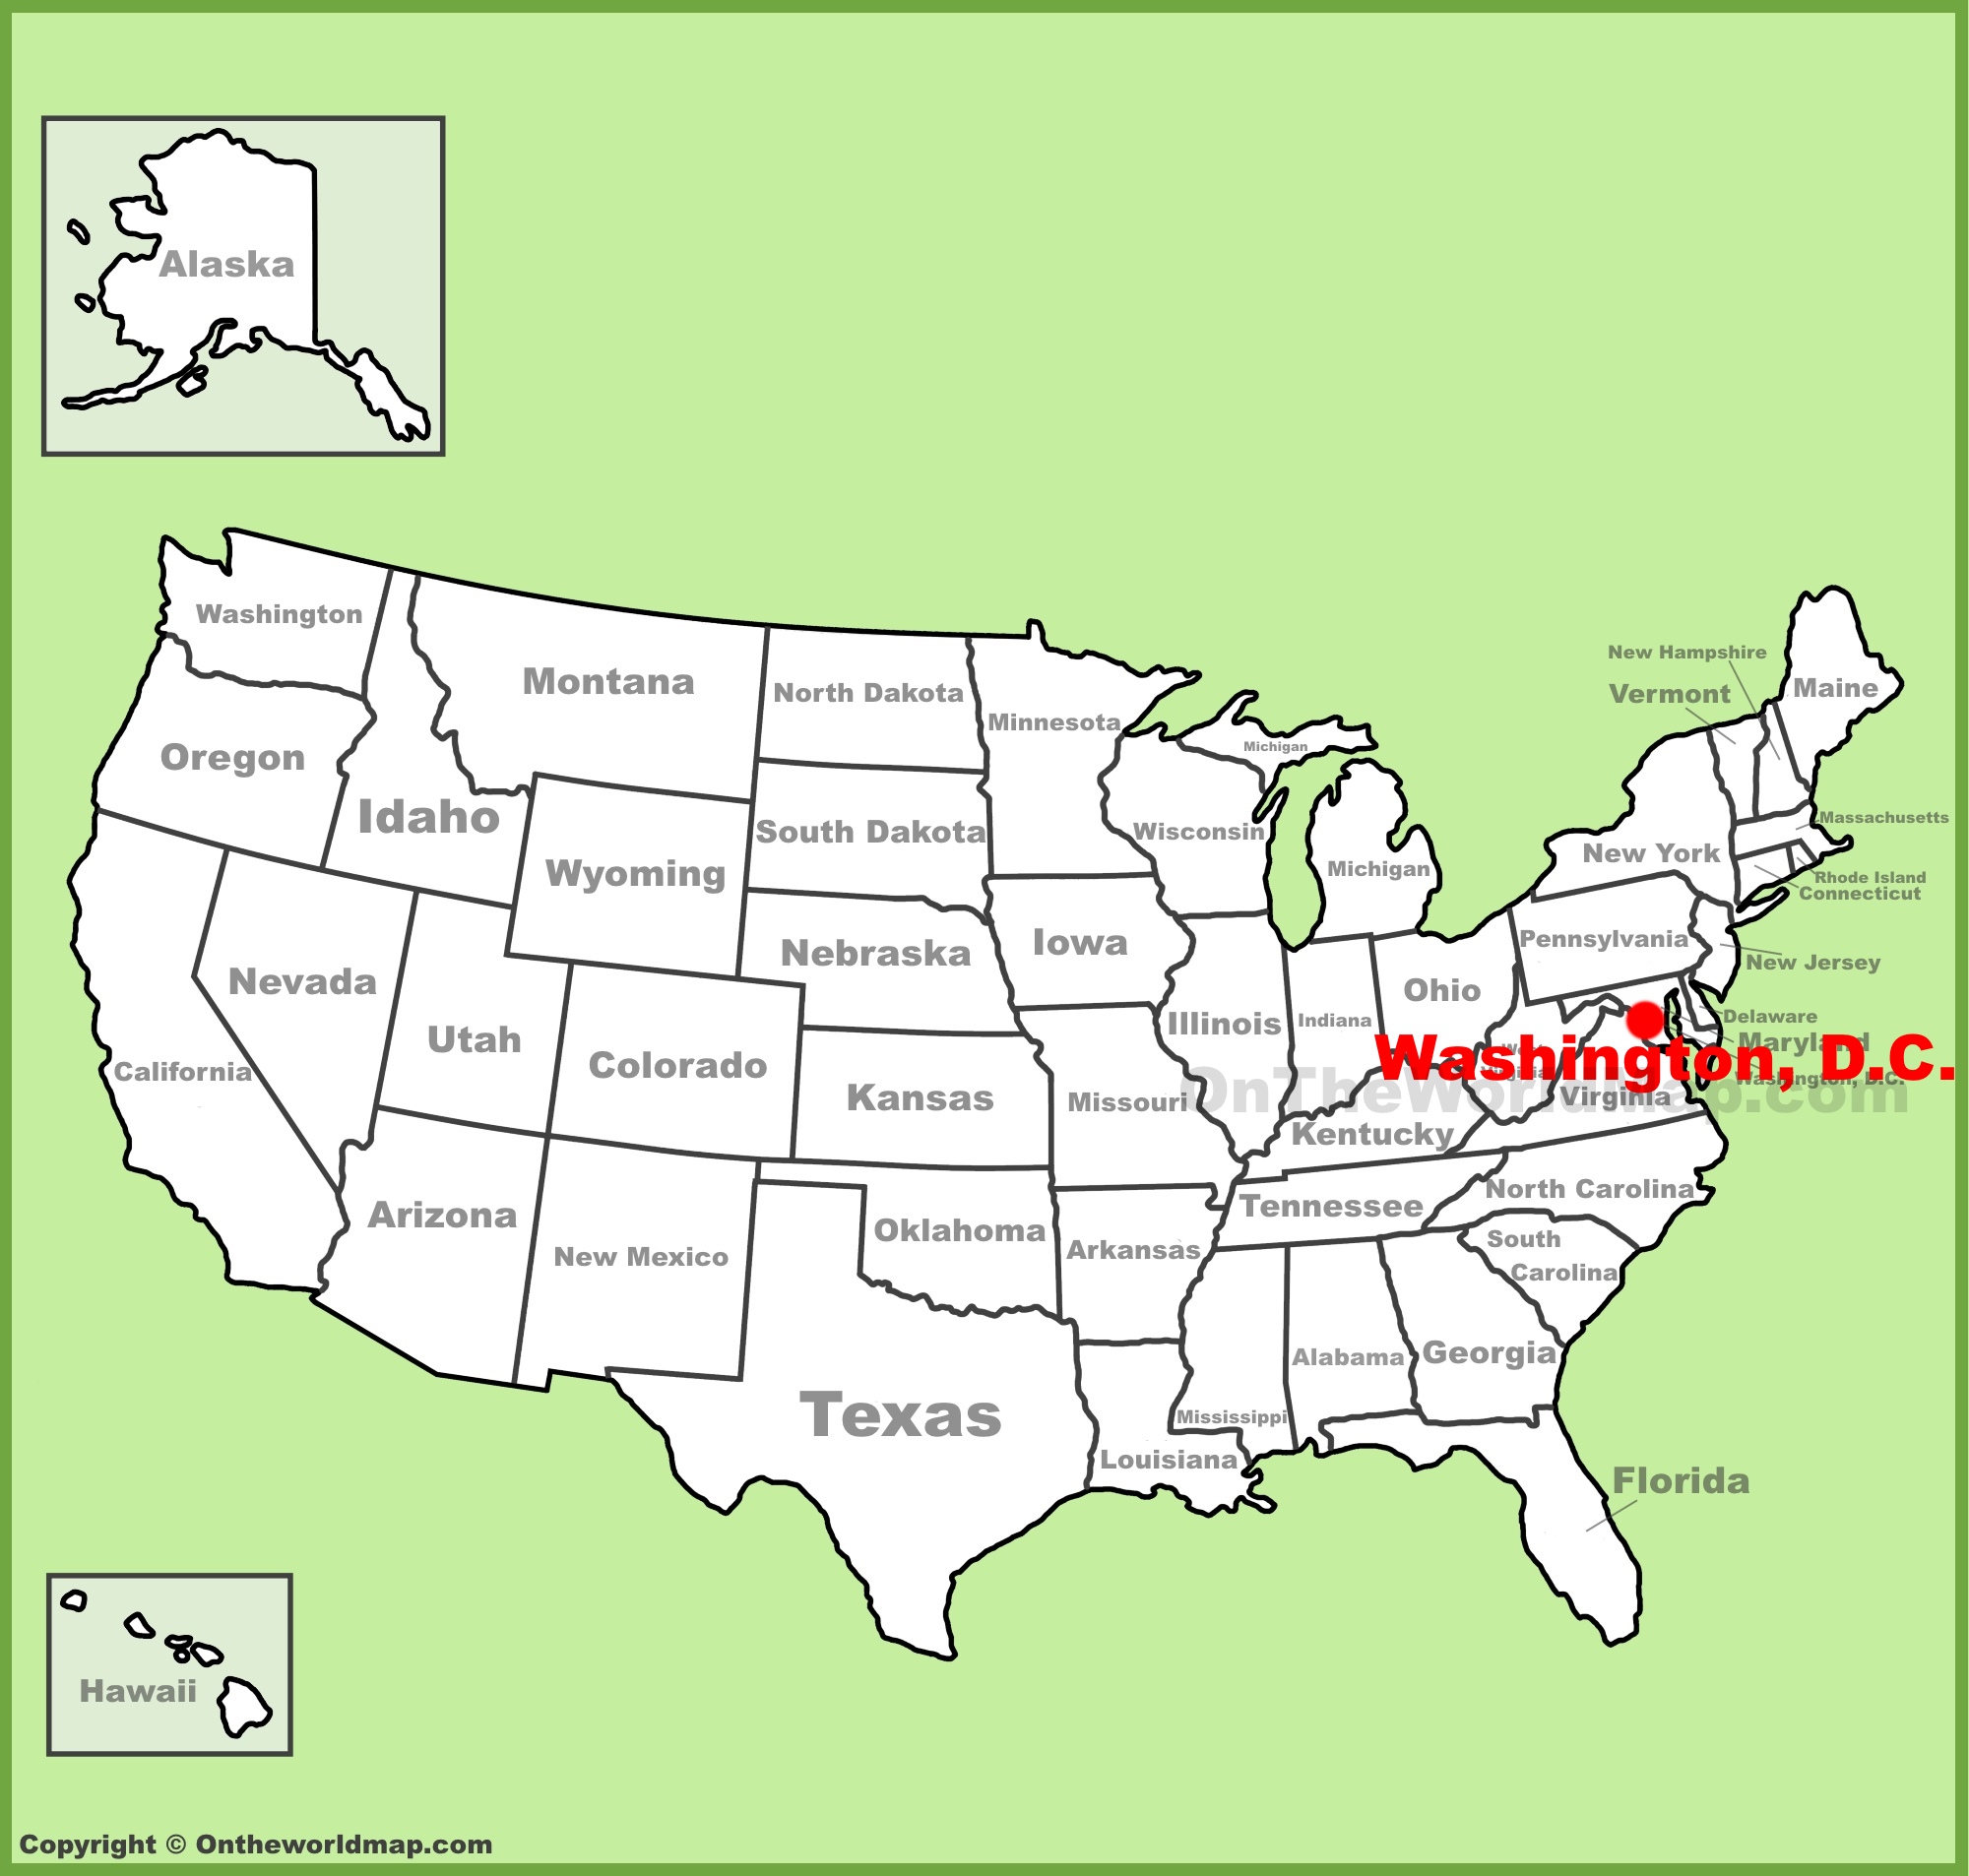 Washington D C Location On The U S Map